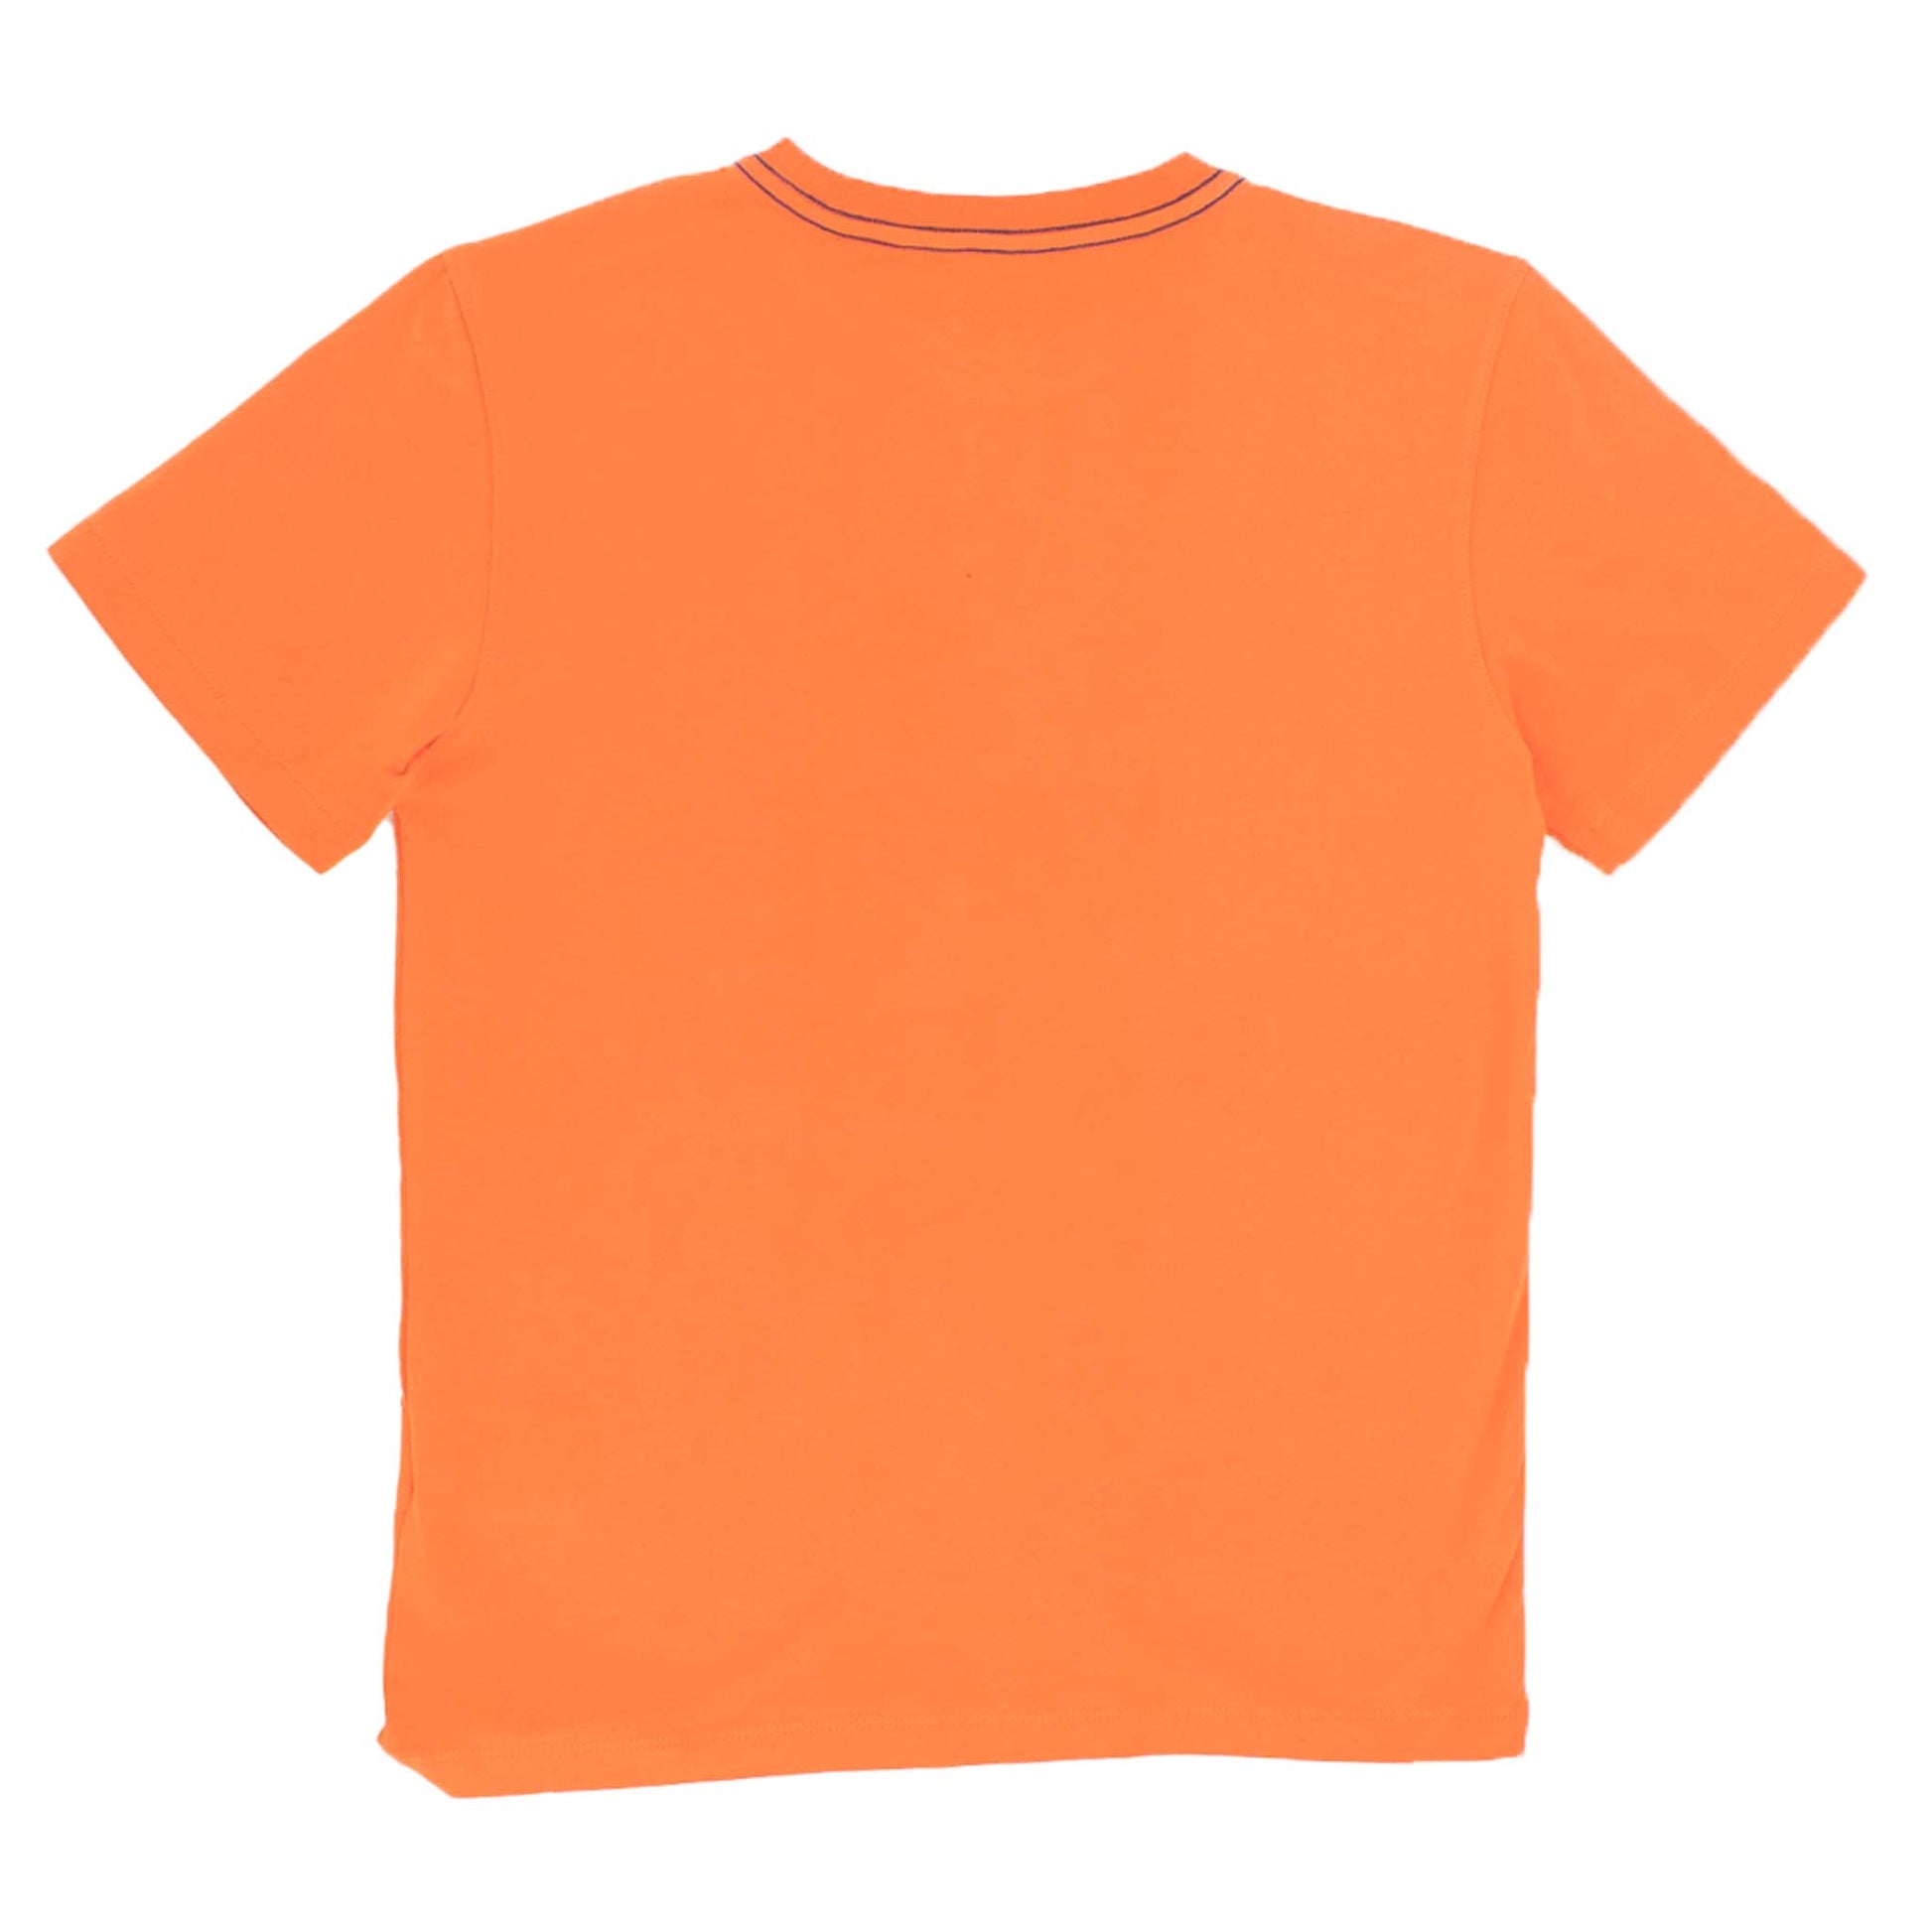 Jack Wolfskin Wilderness Tee T-Shirt Kinder Shirt Baumwolle 1605731-3122-2